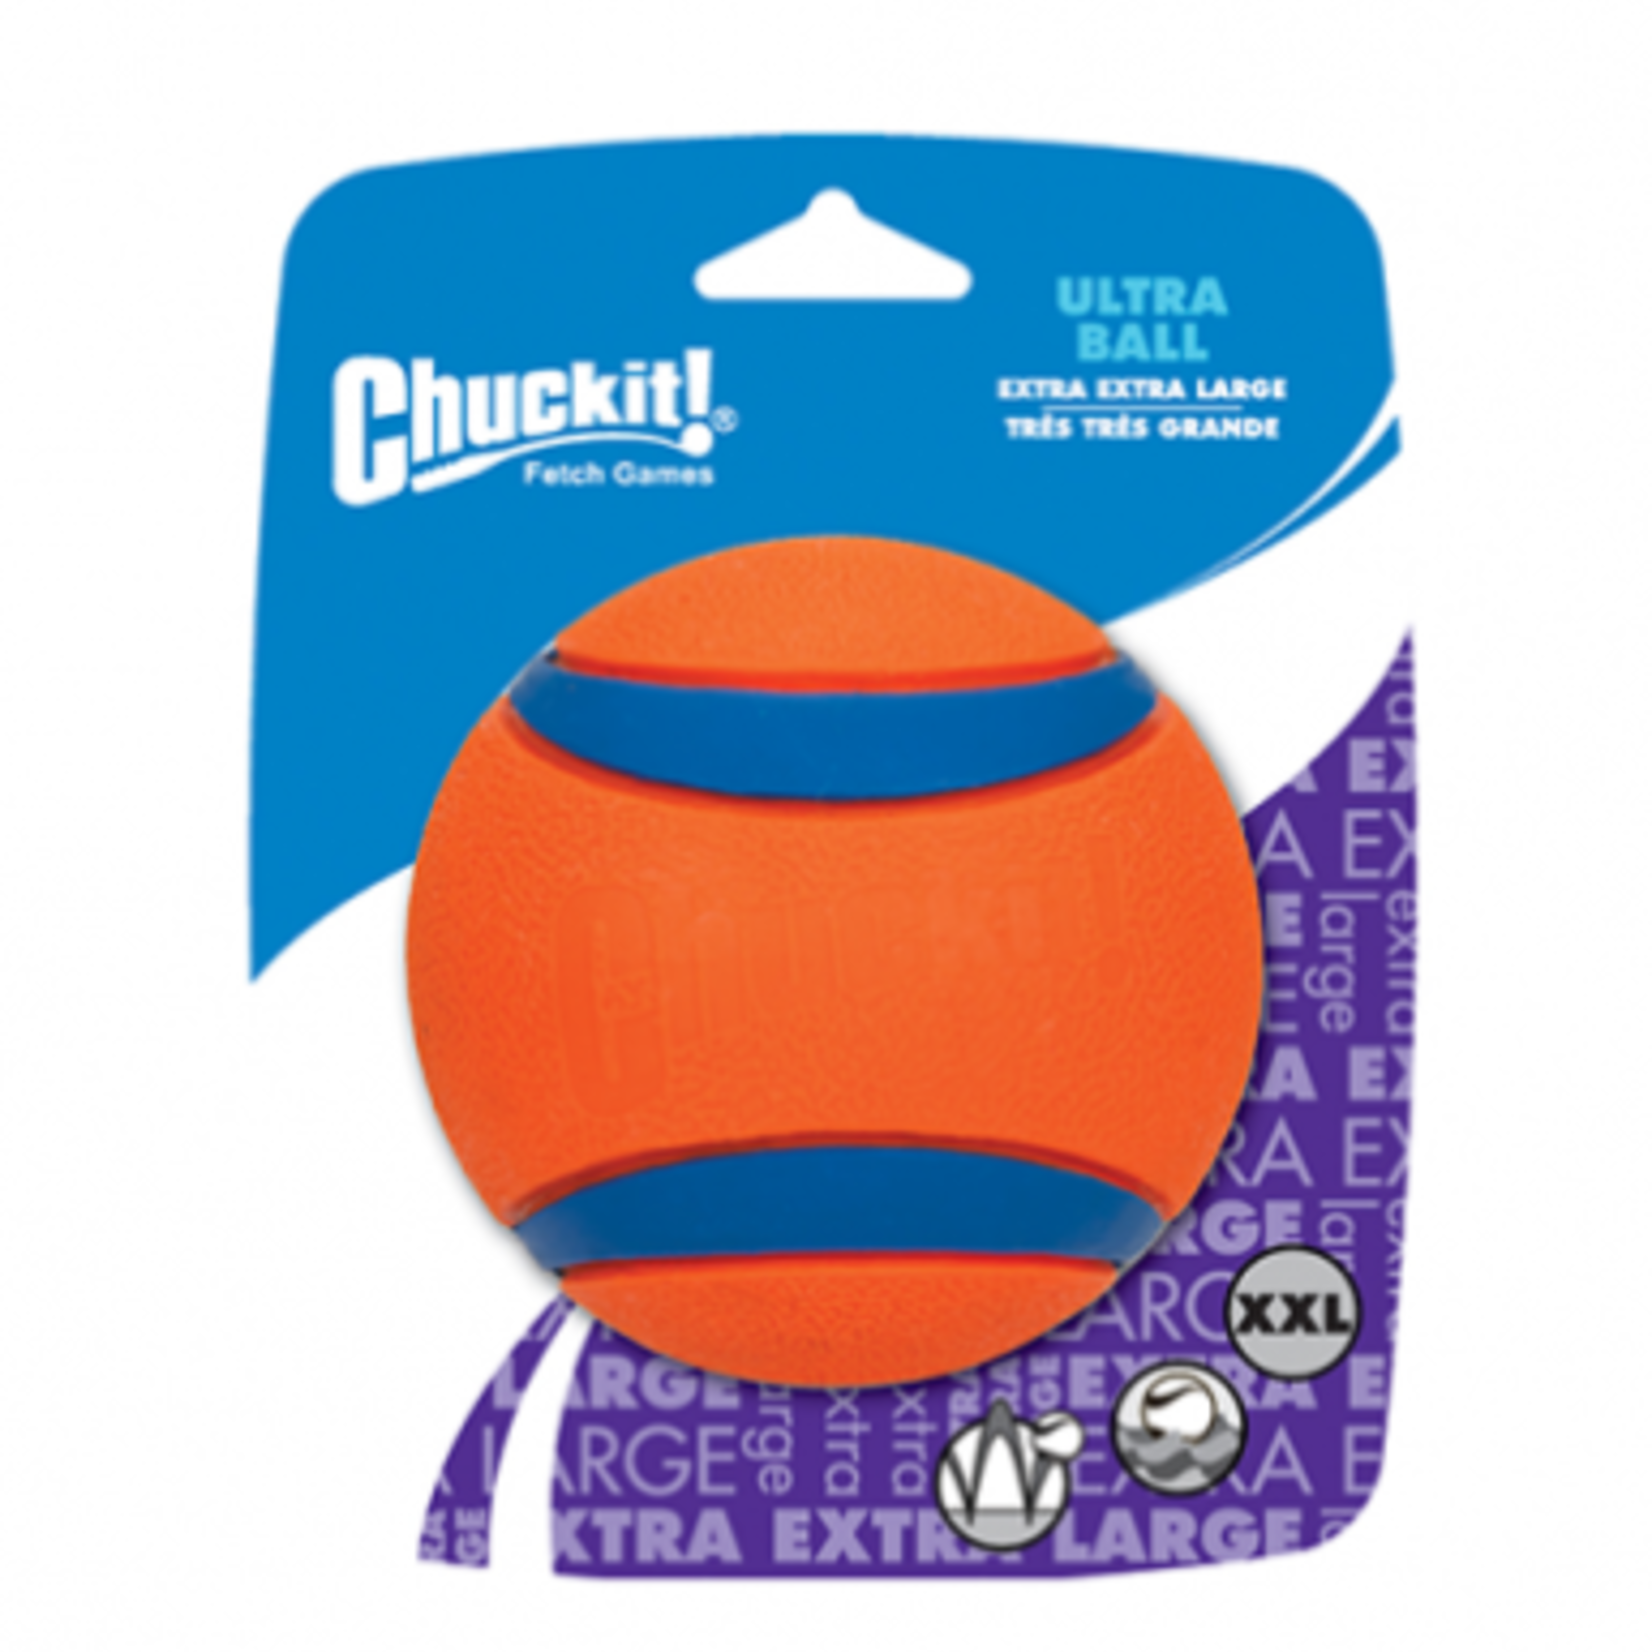 Chuck It! Ultra Ball XX-Large